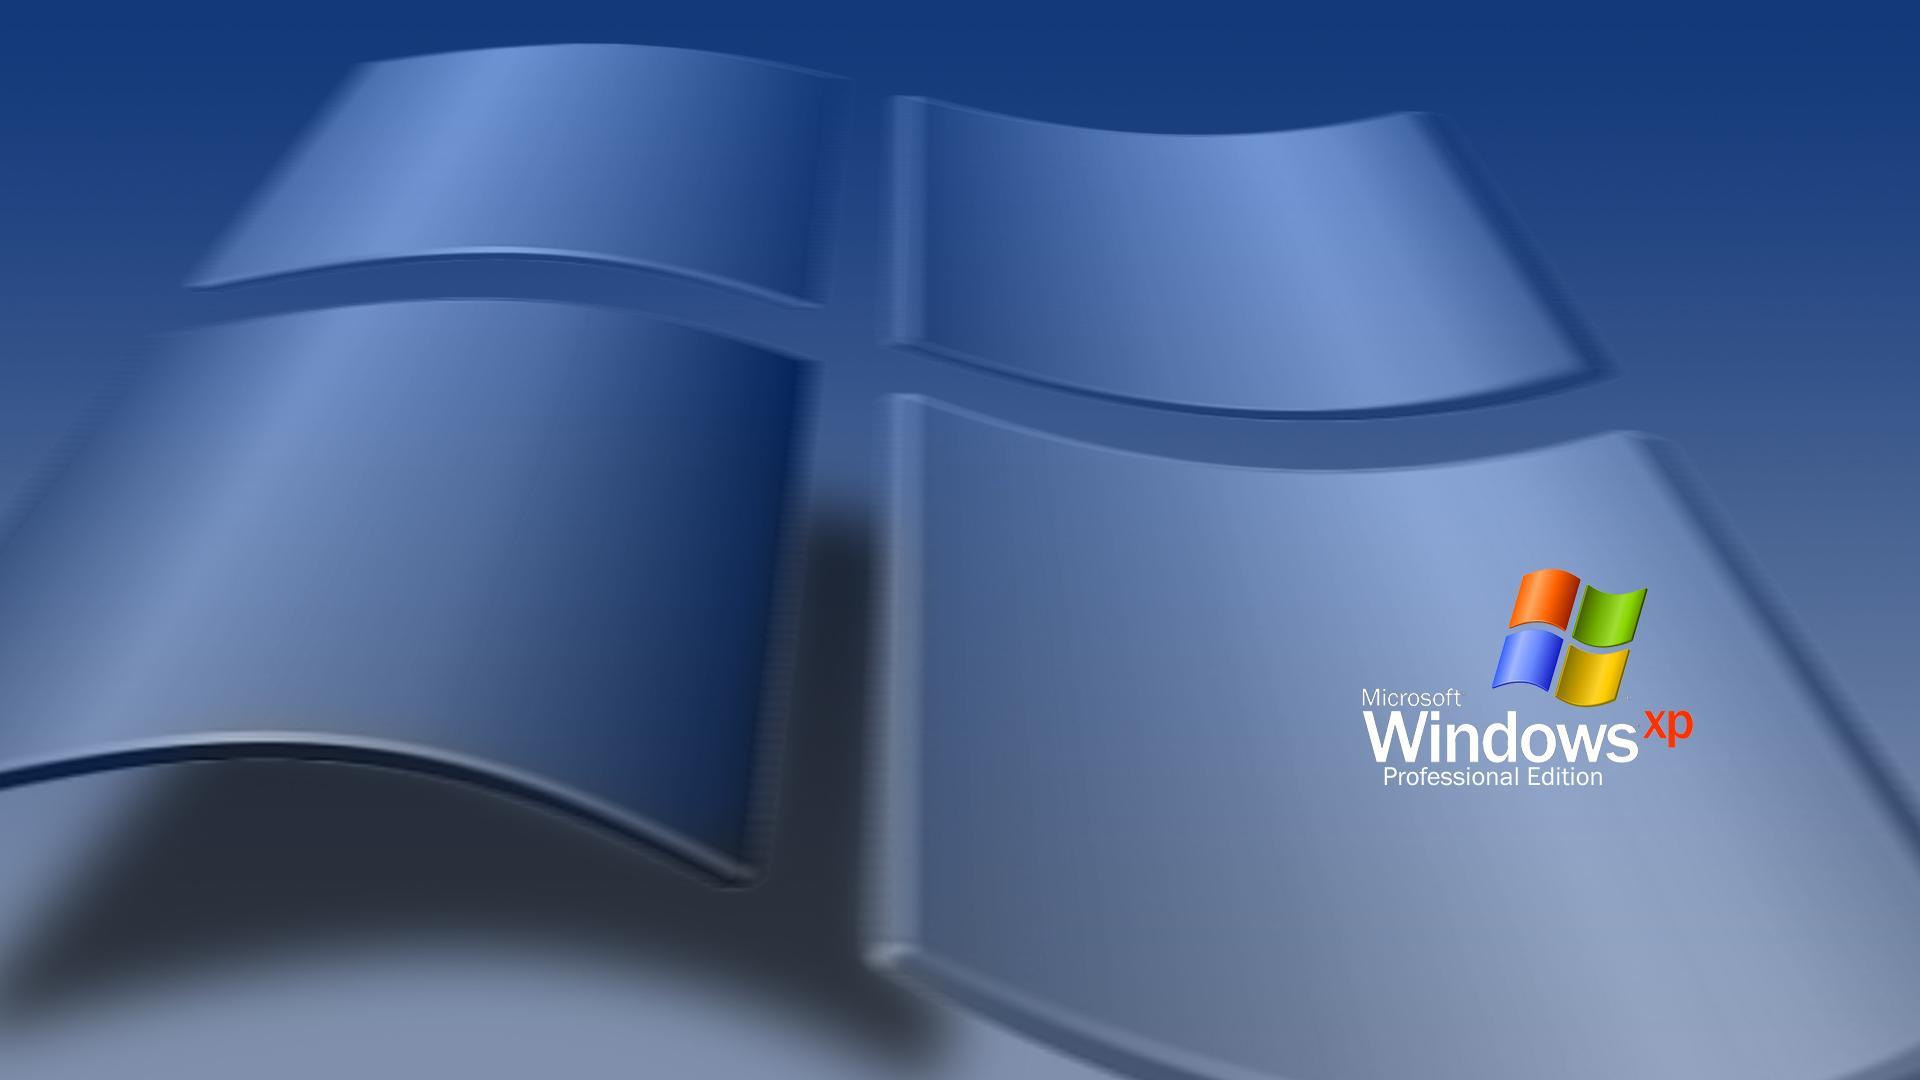 Windows Xp Professional Wallpapers Top Free Windows Xp